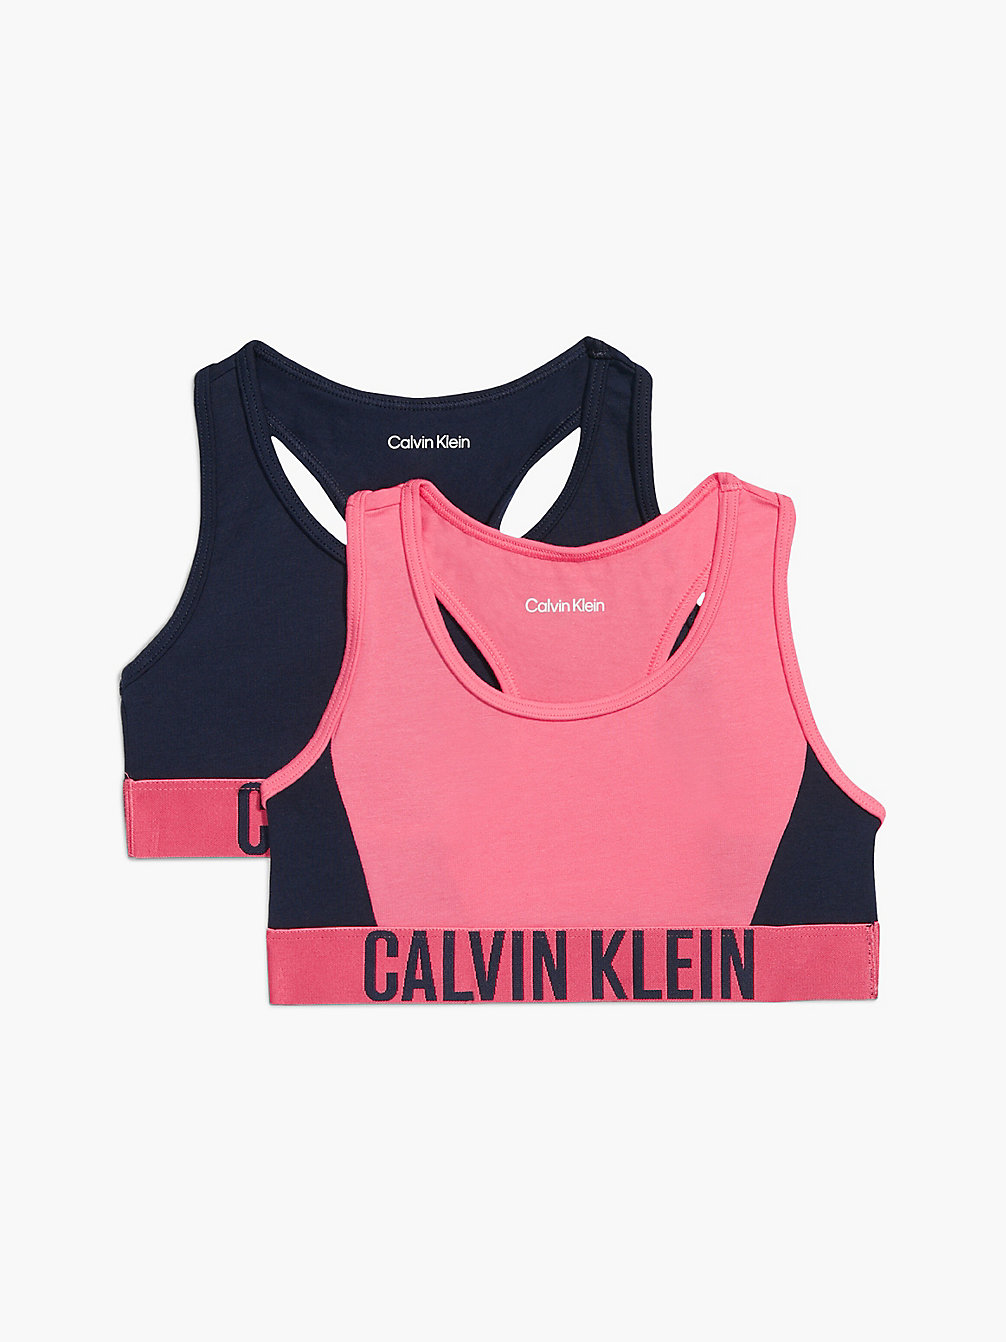 PINKDAWN/NAVYIRIS Lot De 2 Brassières Pour Fille - Intense Power undefined girls Calvin Klein